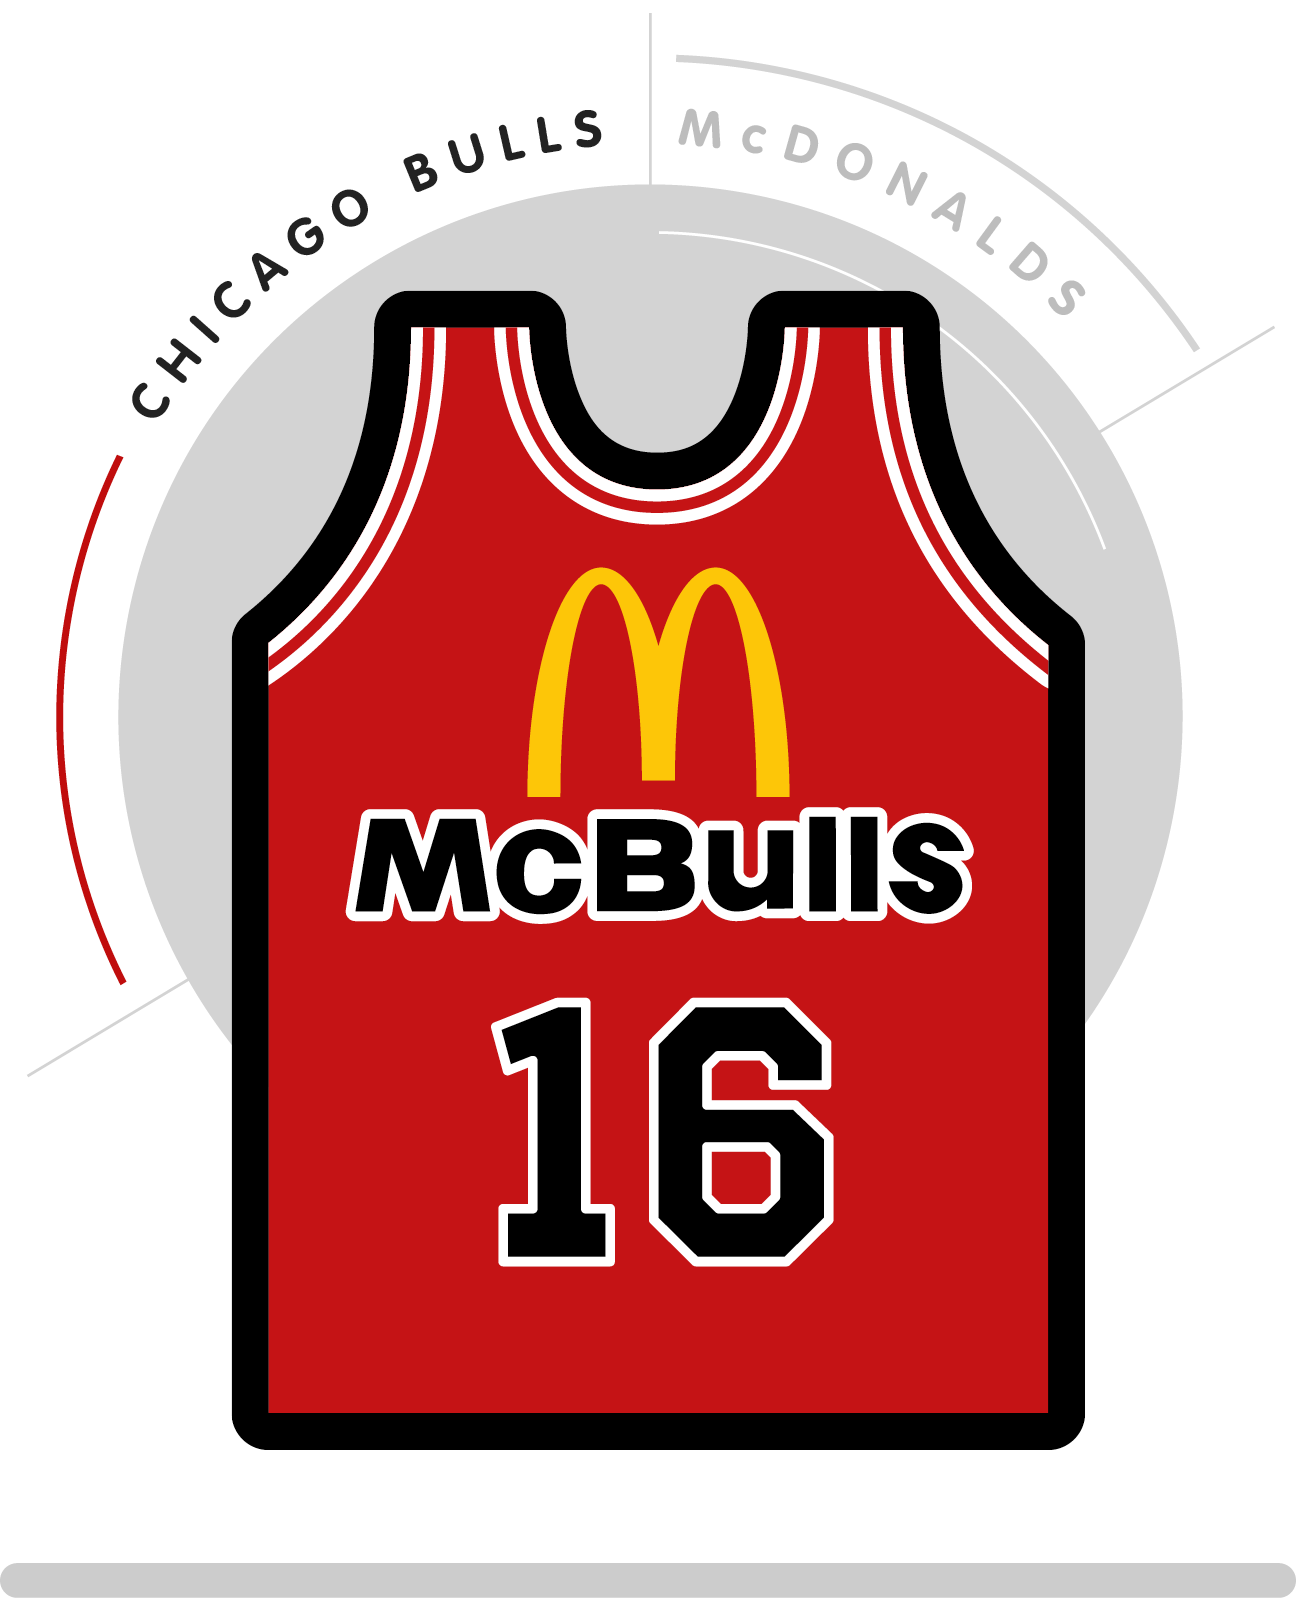 Chicago Bulls jersey patch ideas for 2017-18 NBA season